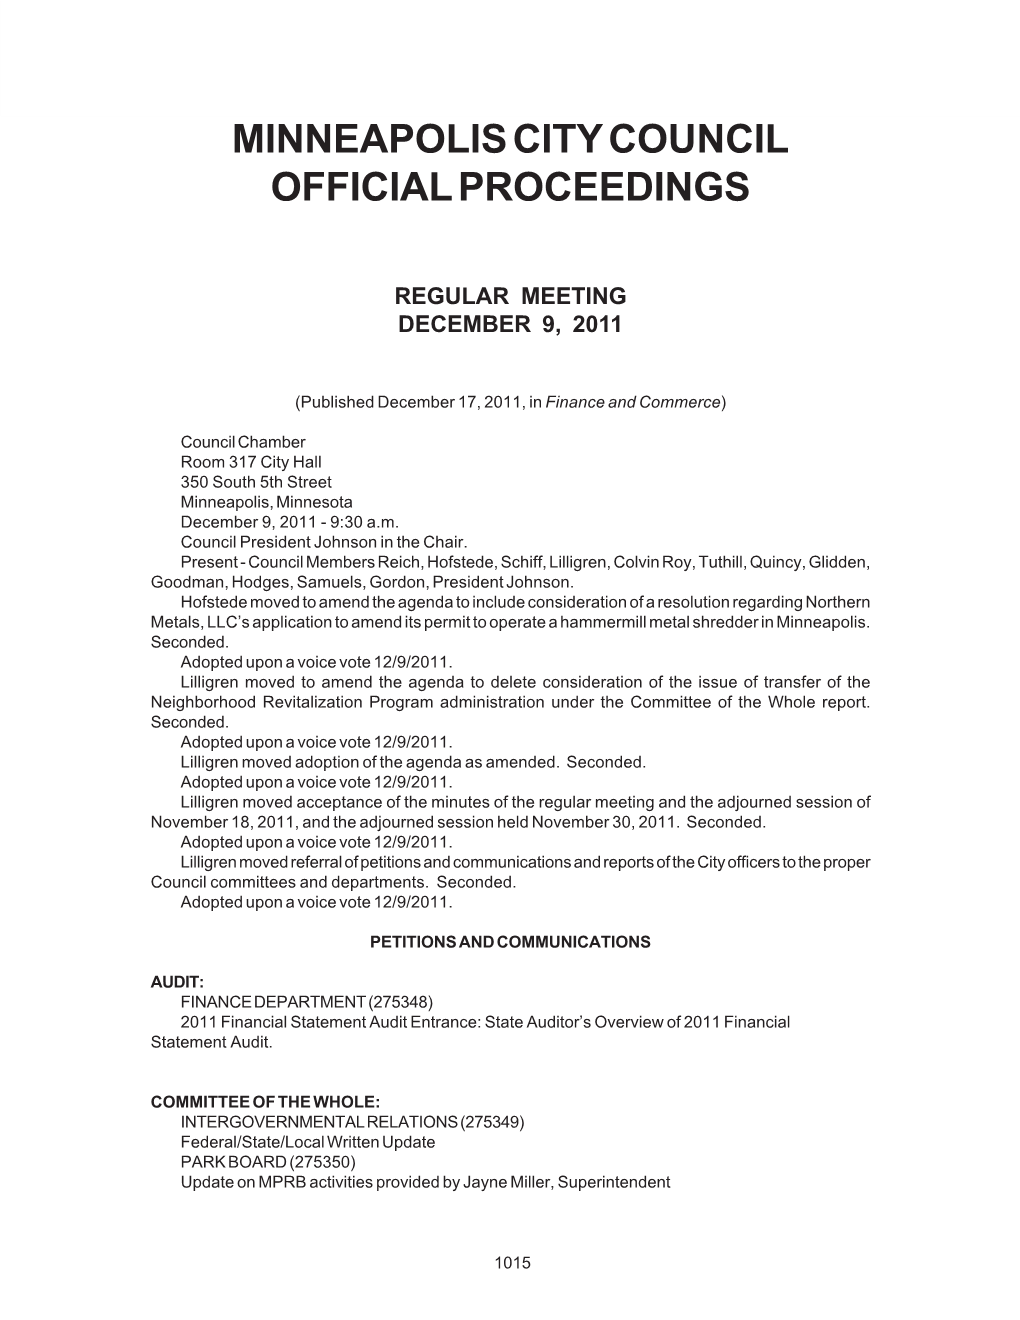 Minneapolis City Council Official Proceedings